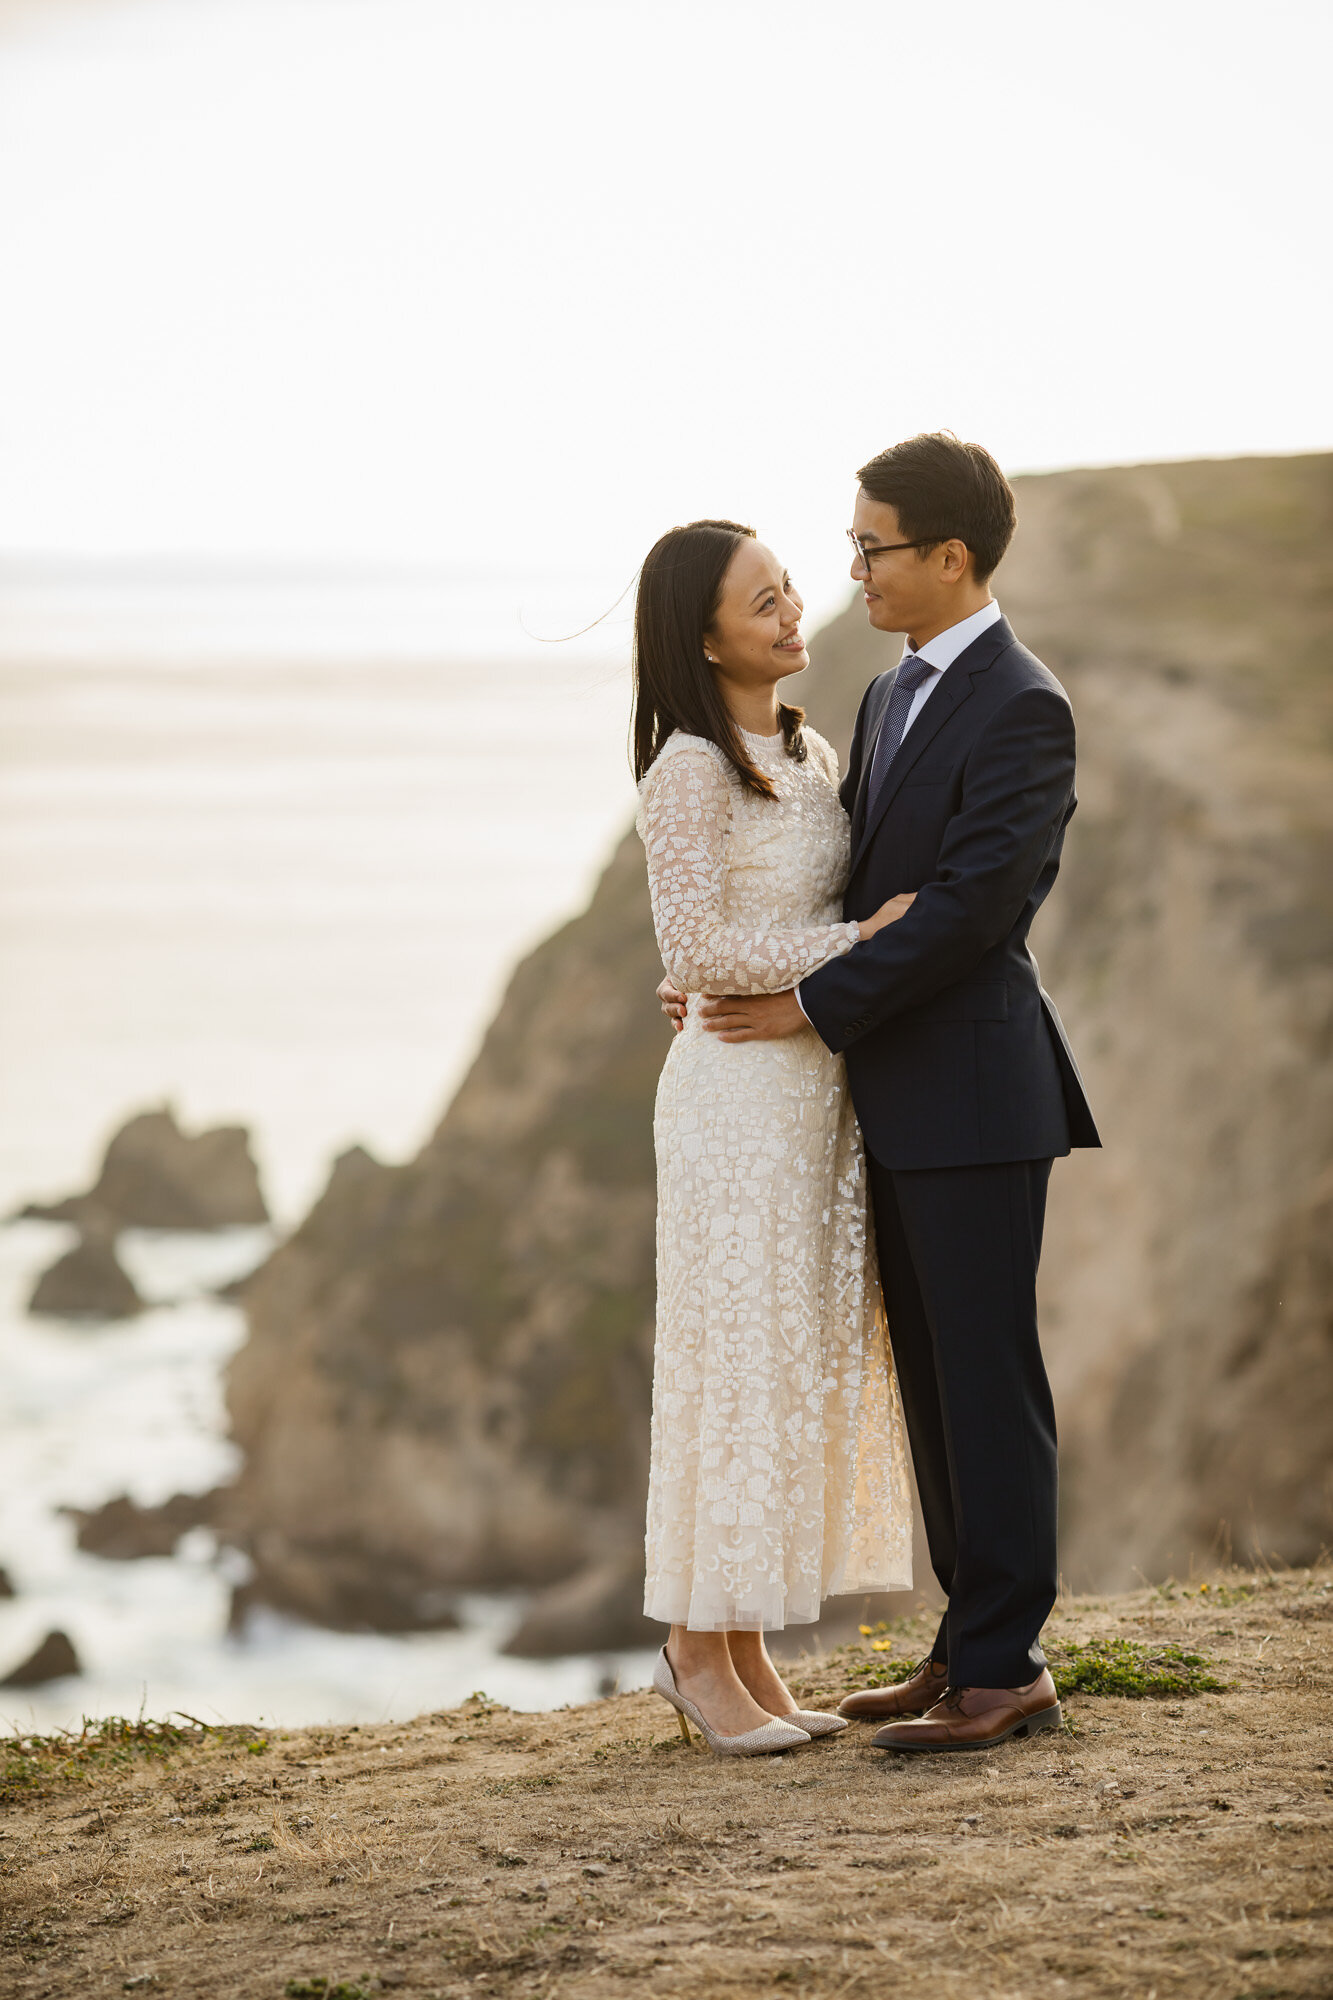 Hong Kong wedding couple celebrate their Point Reyes elopement